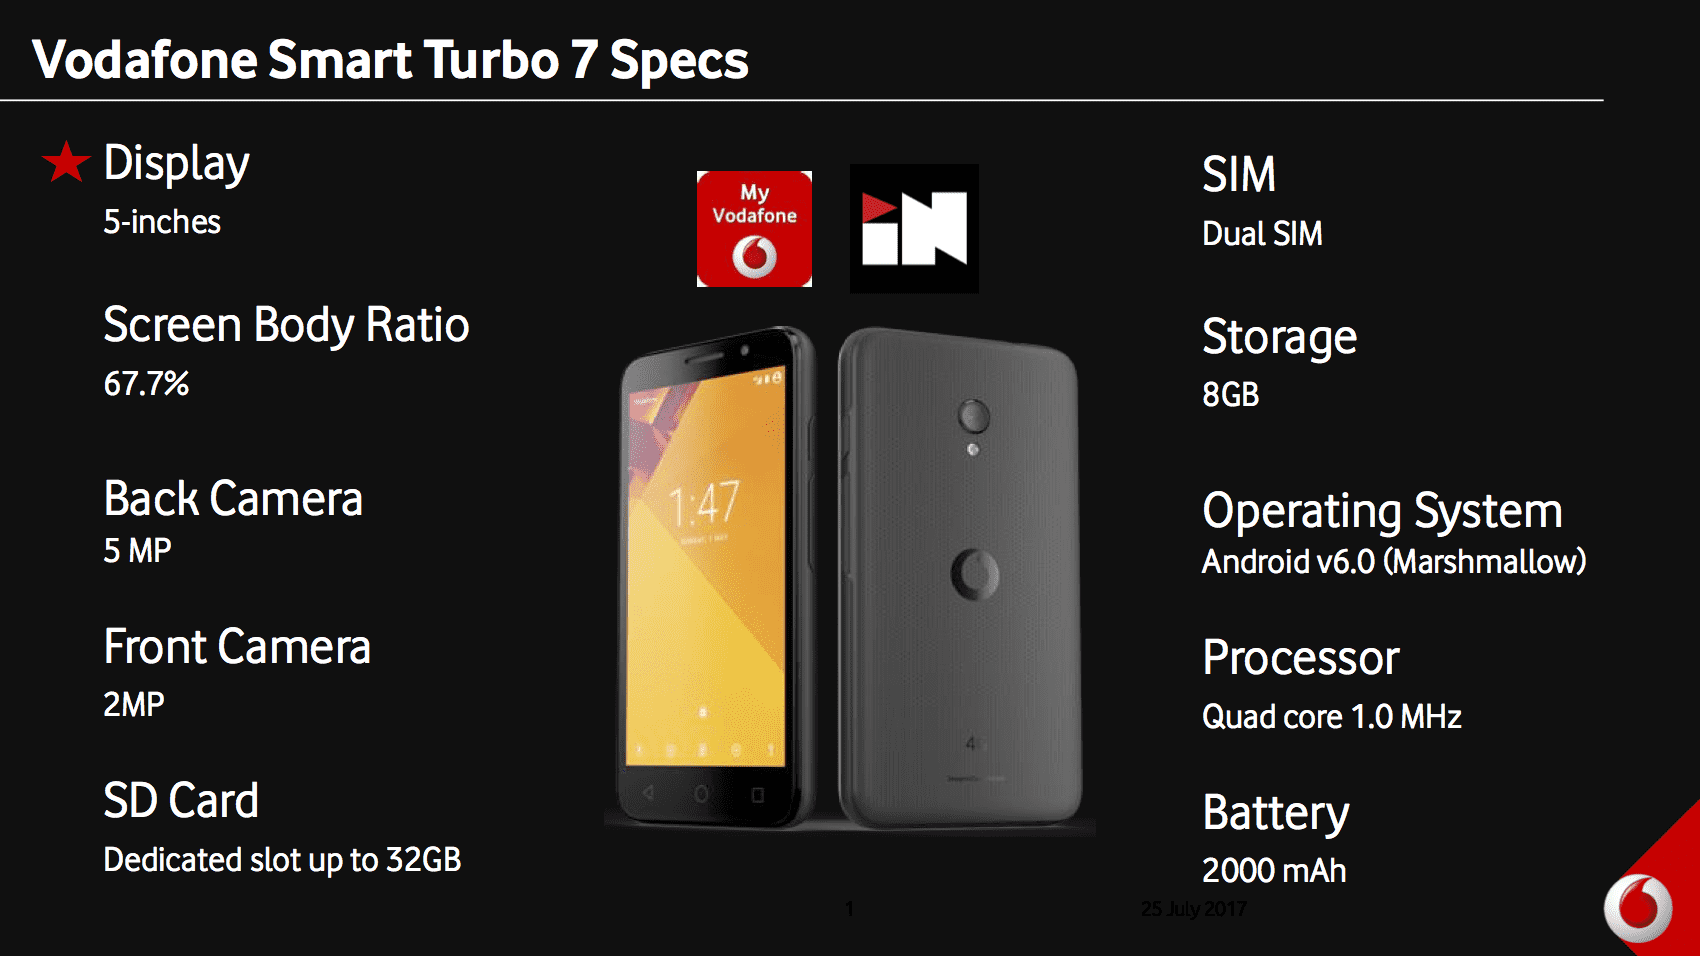 Vodafone Smart Turbo 7 Specs